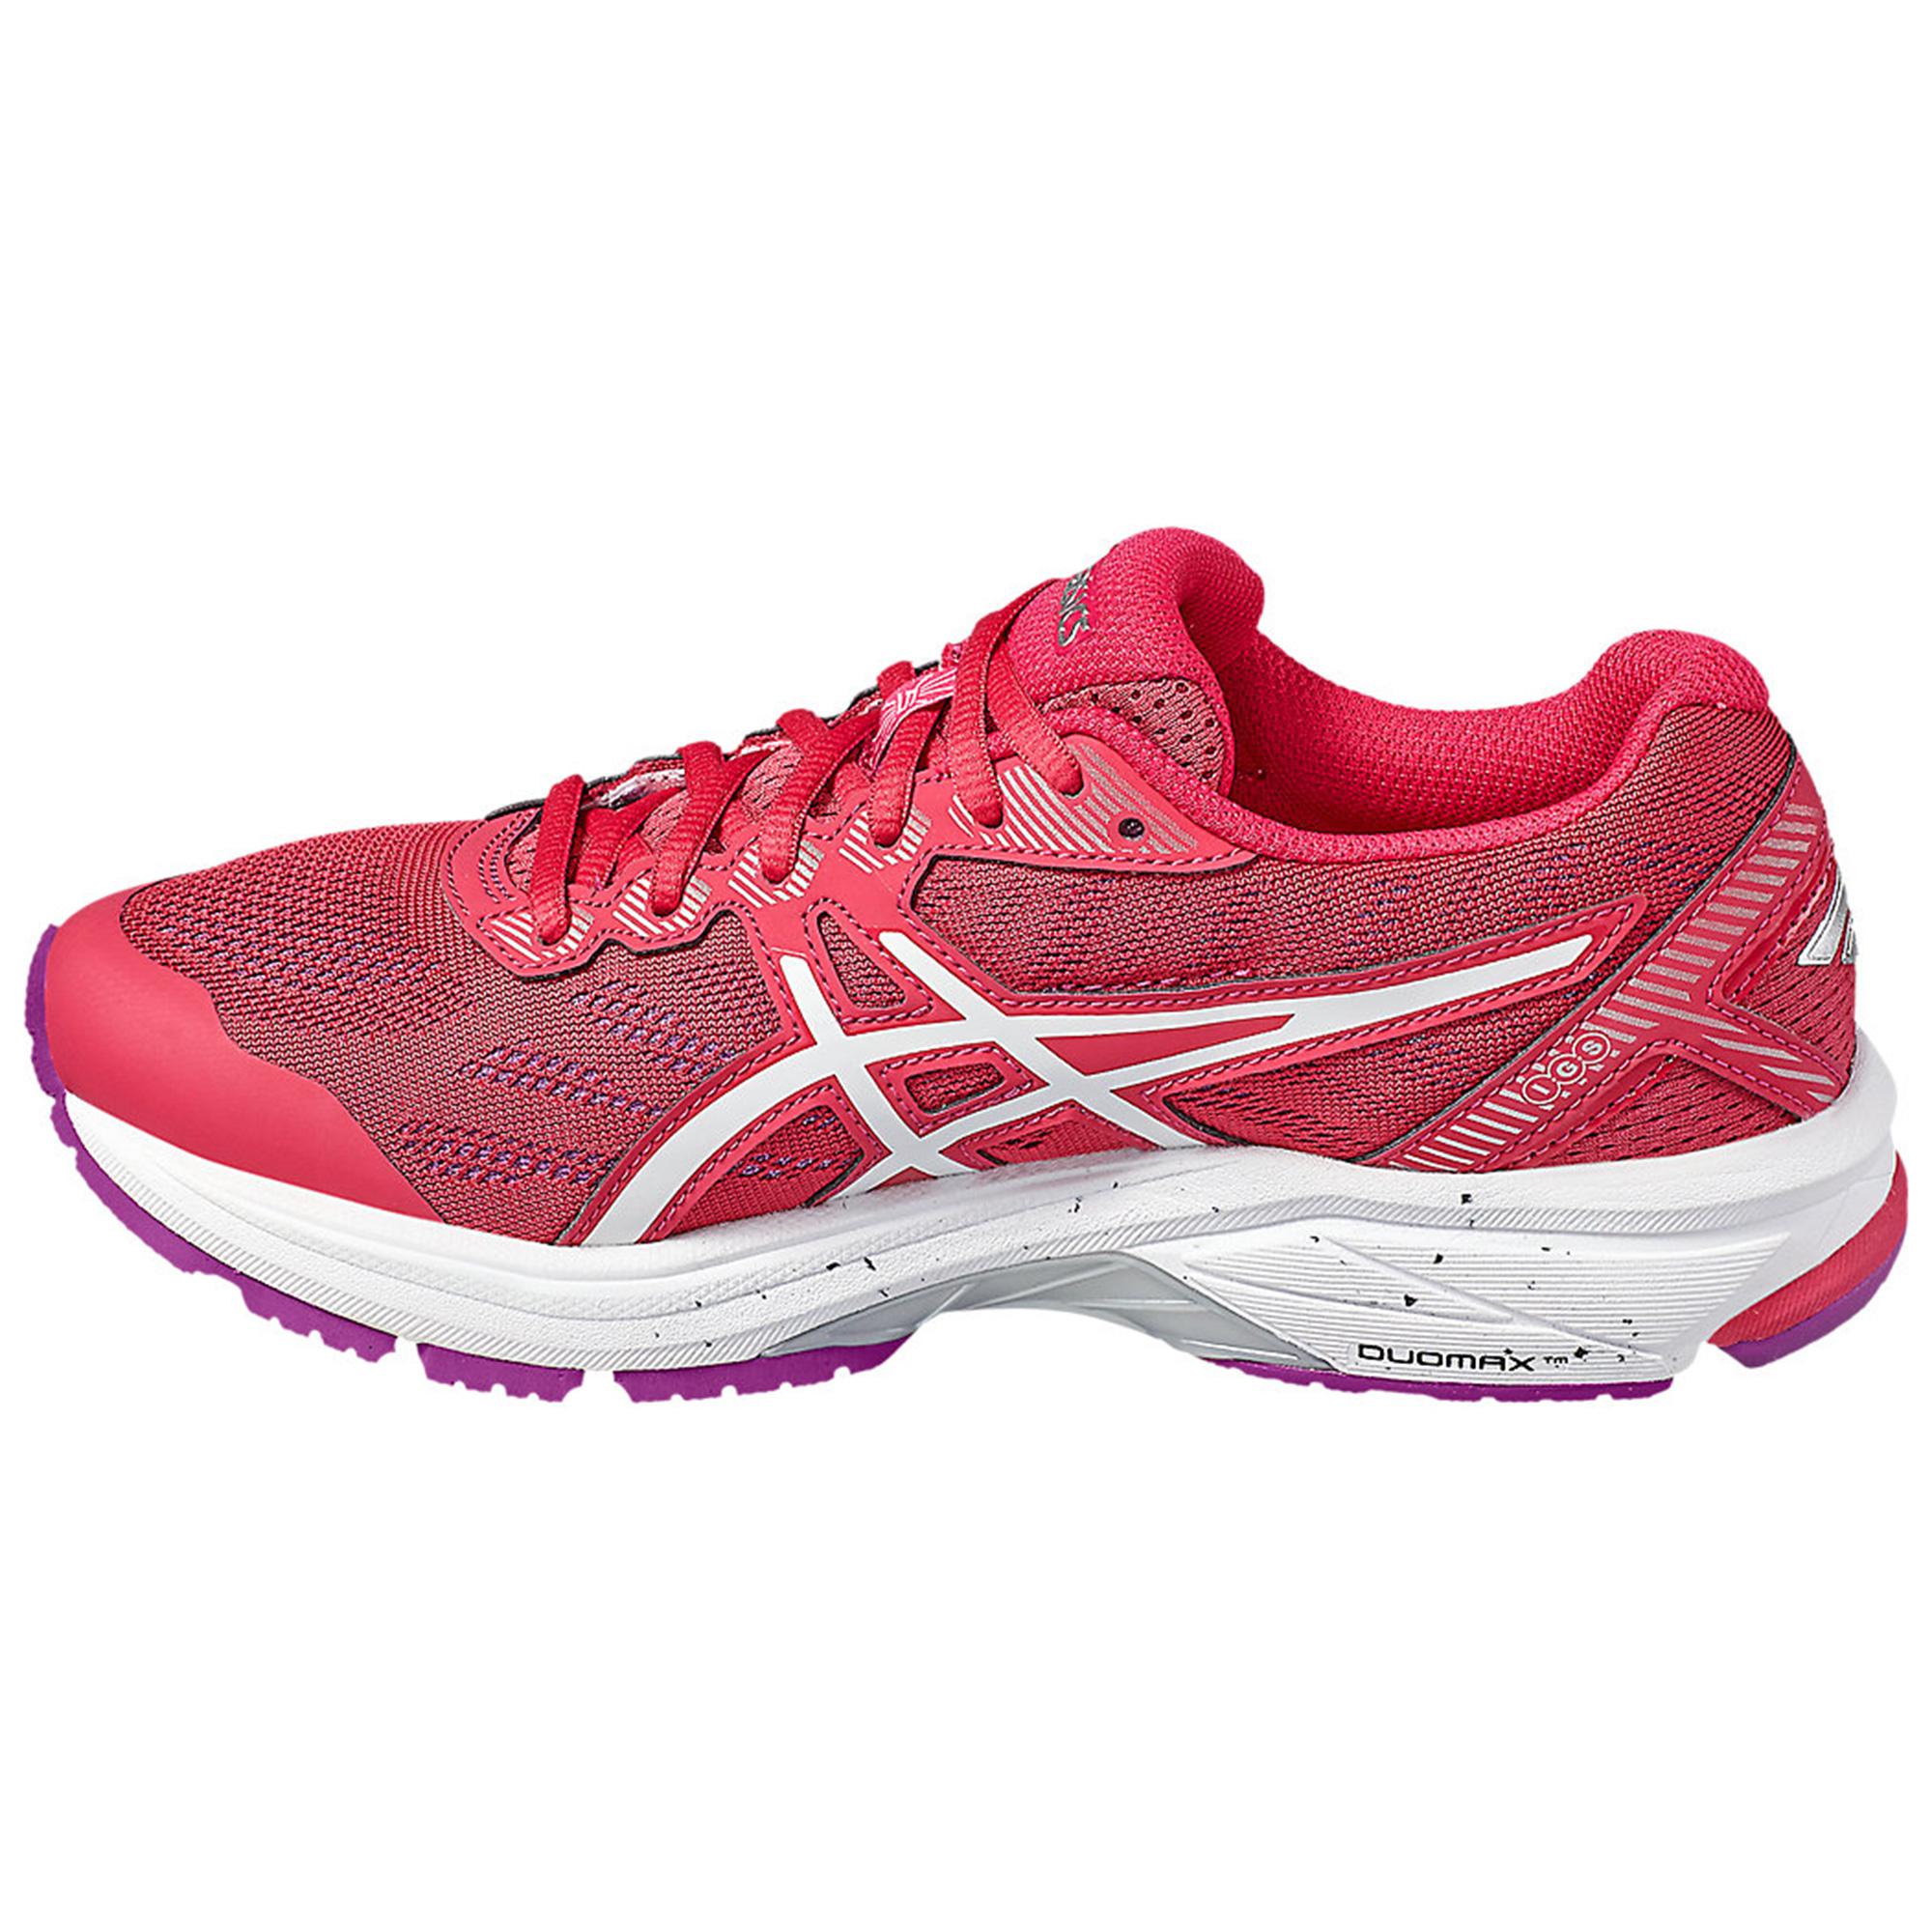 Asics Womens GT-1000 5 Running Shoes - Bright Rose - www.paulmartinsmith.com